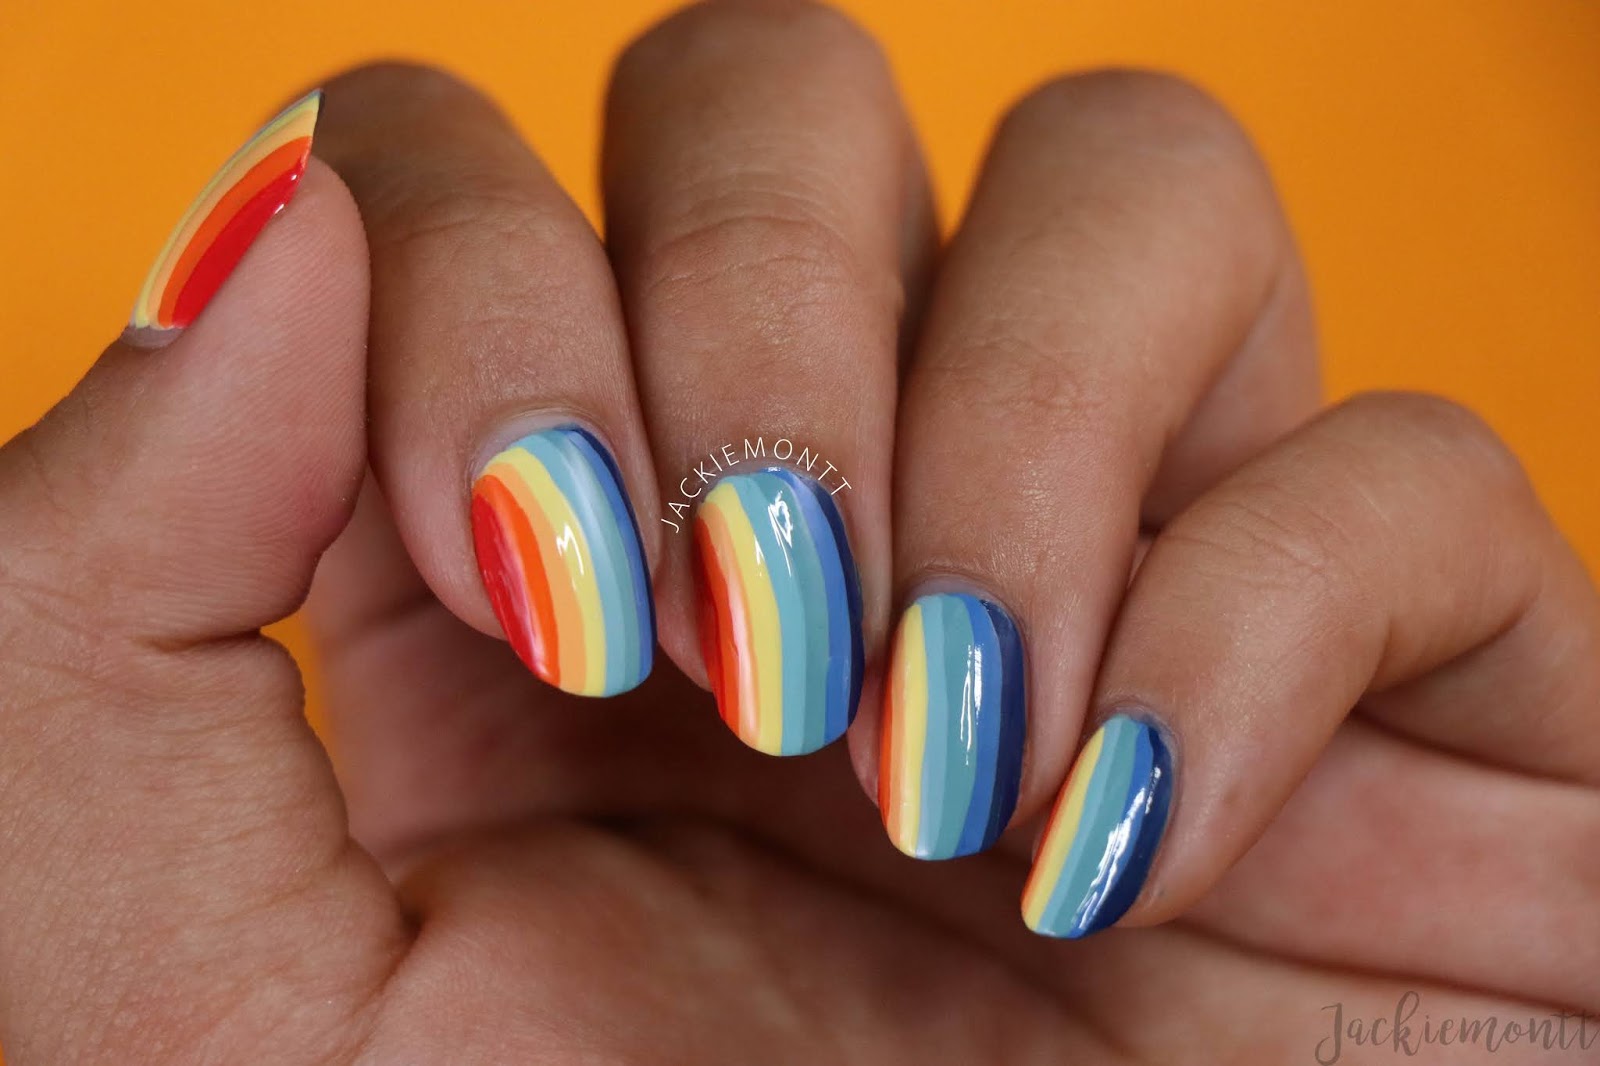 ehmkay nails: Reflective Rainbow Nail Art with KBShimmer